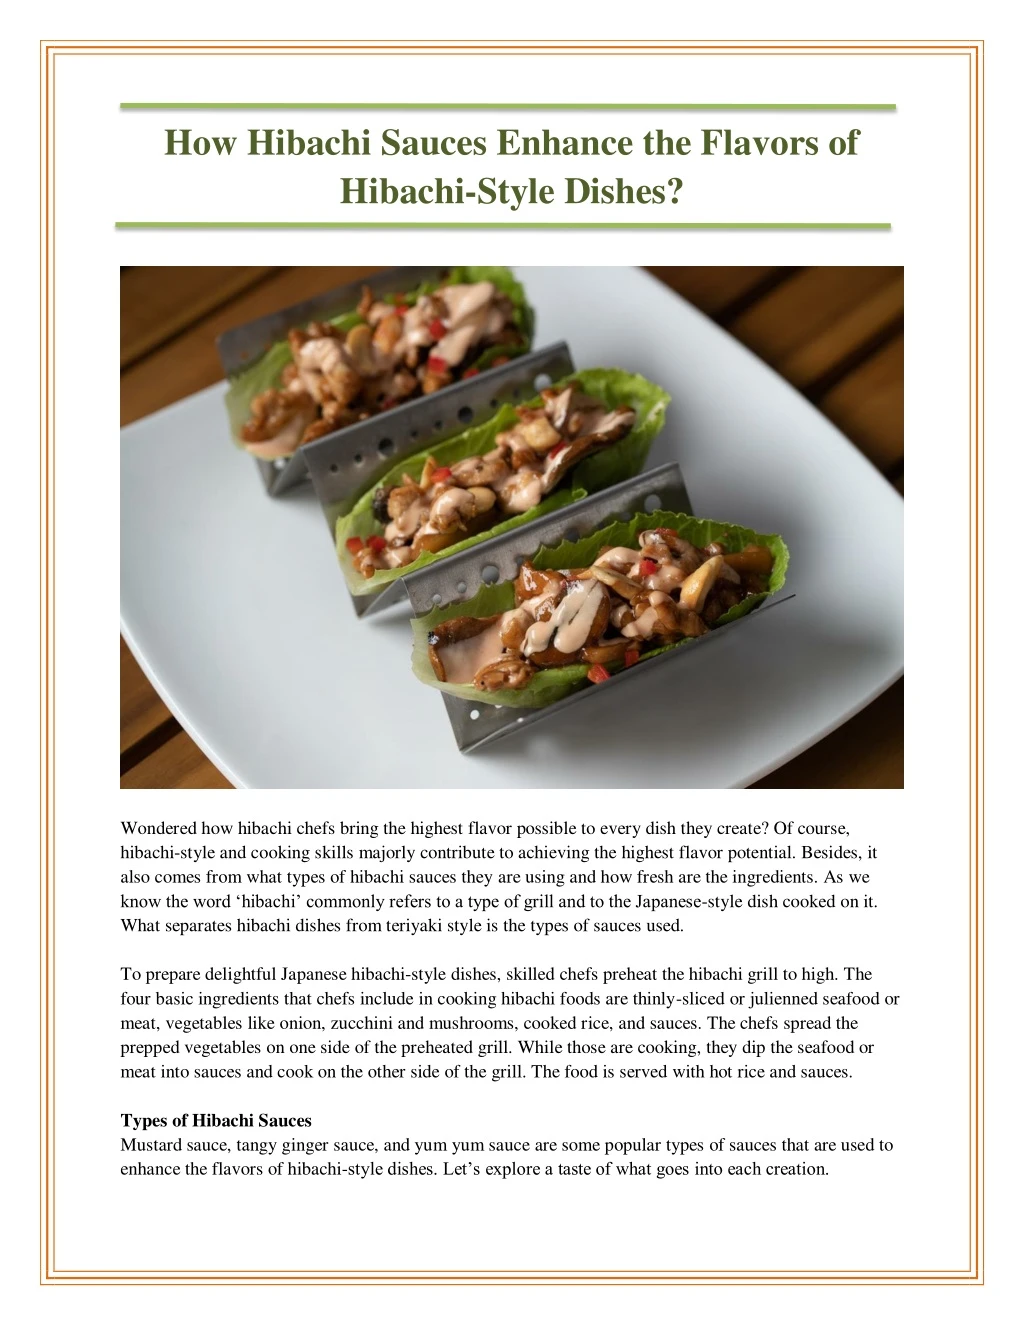 how hibachi sauces enhance the flavors of hibachi